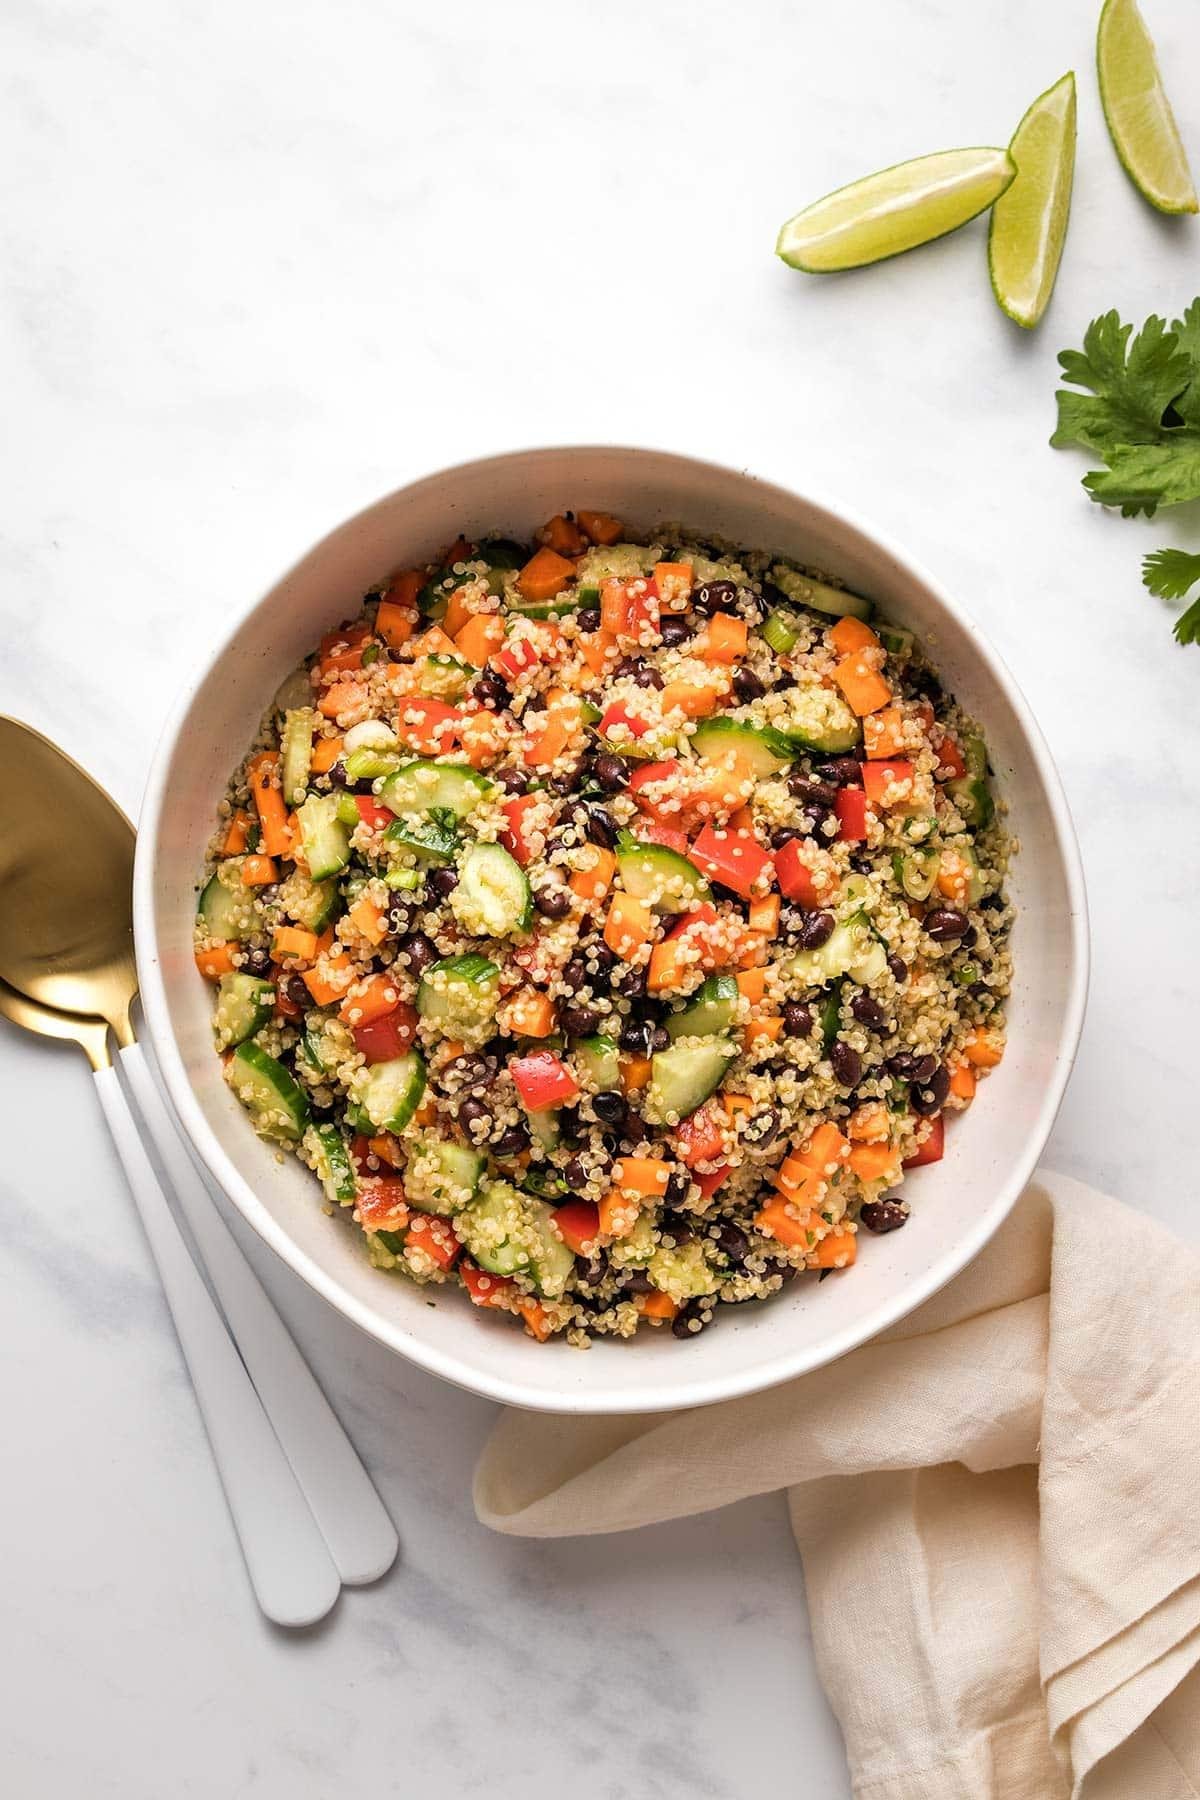 Delicious and Nutritious: A Recipe for Vegan Quinoa and Black Bean ...